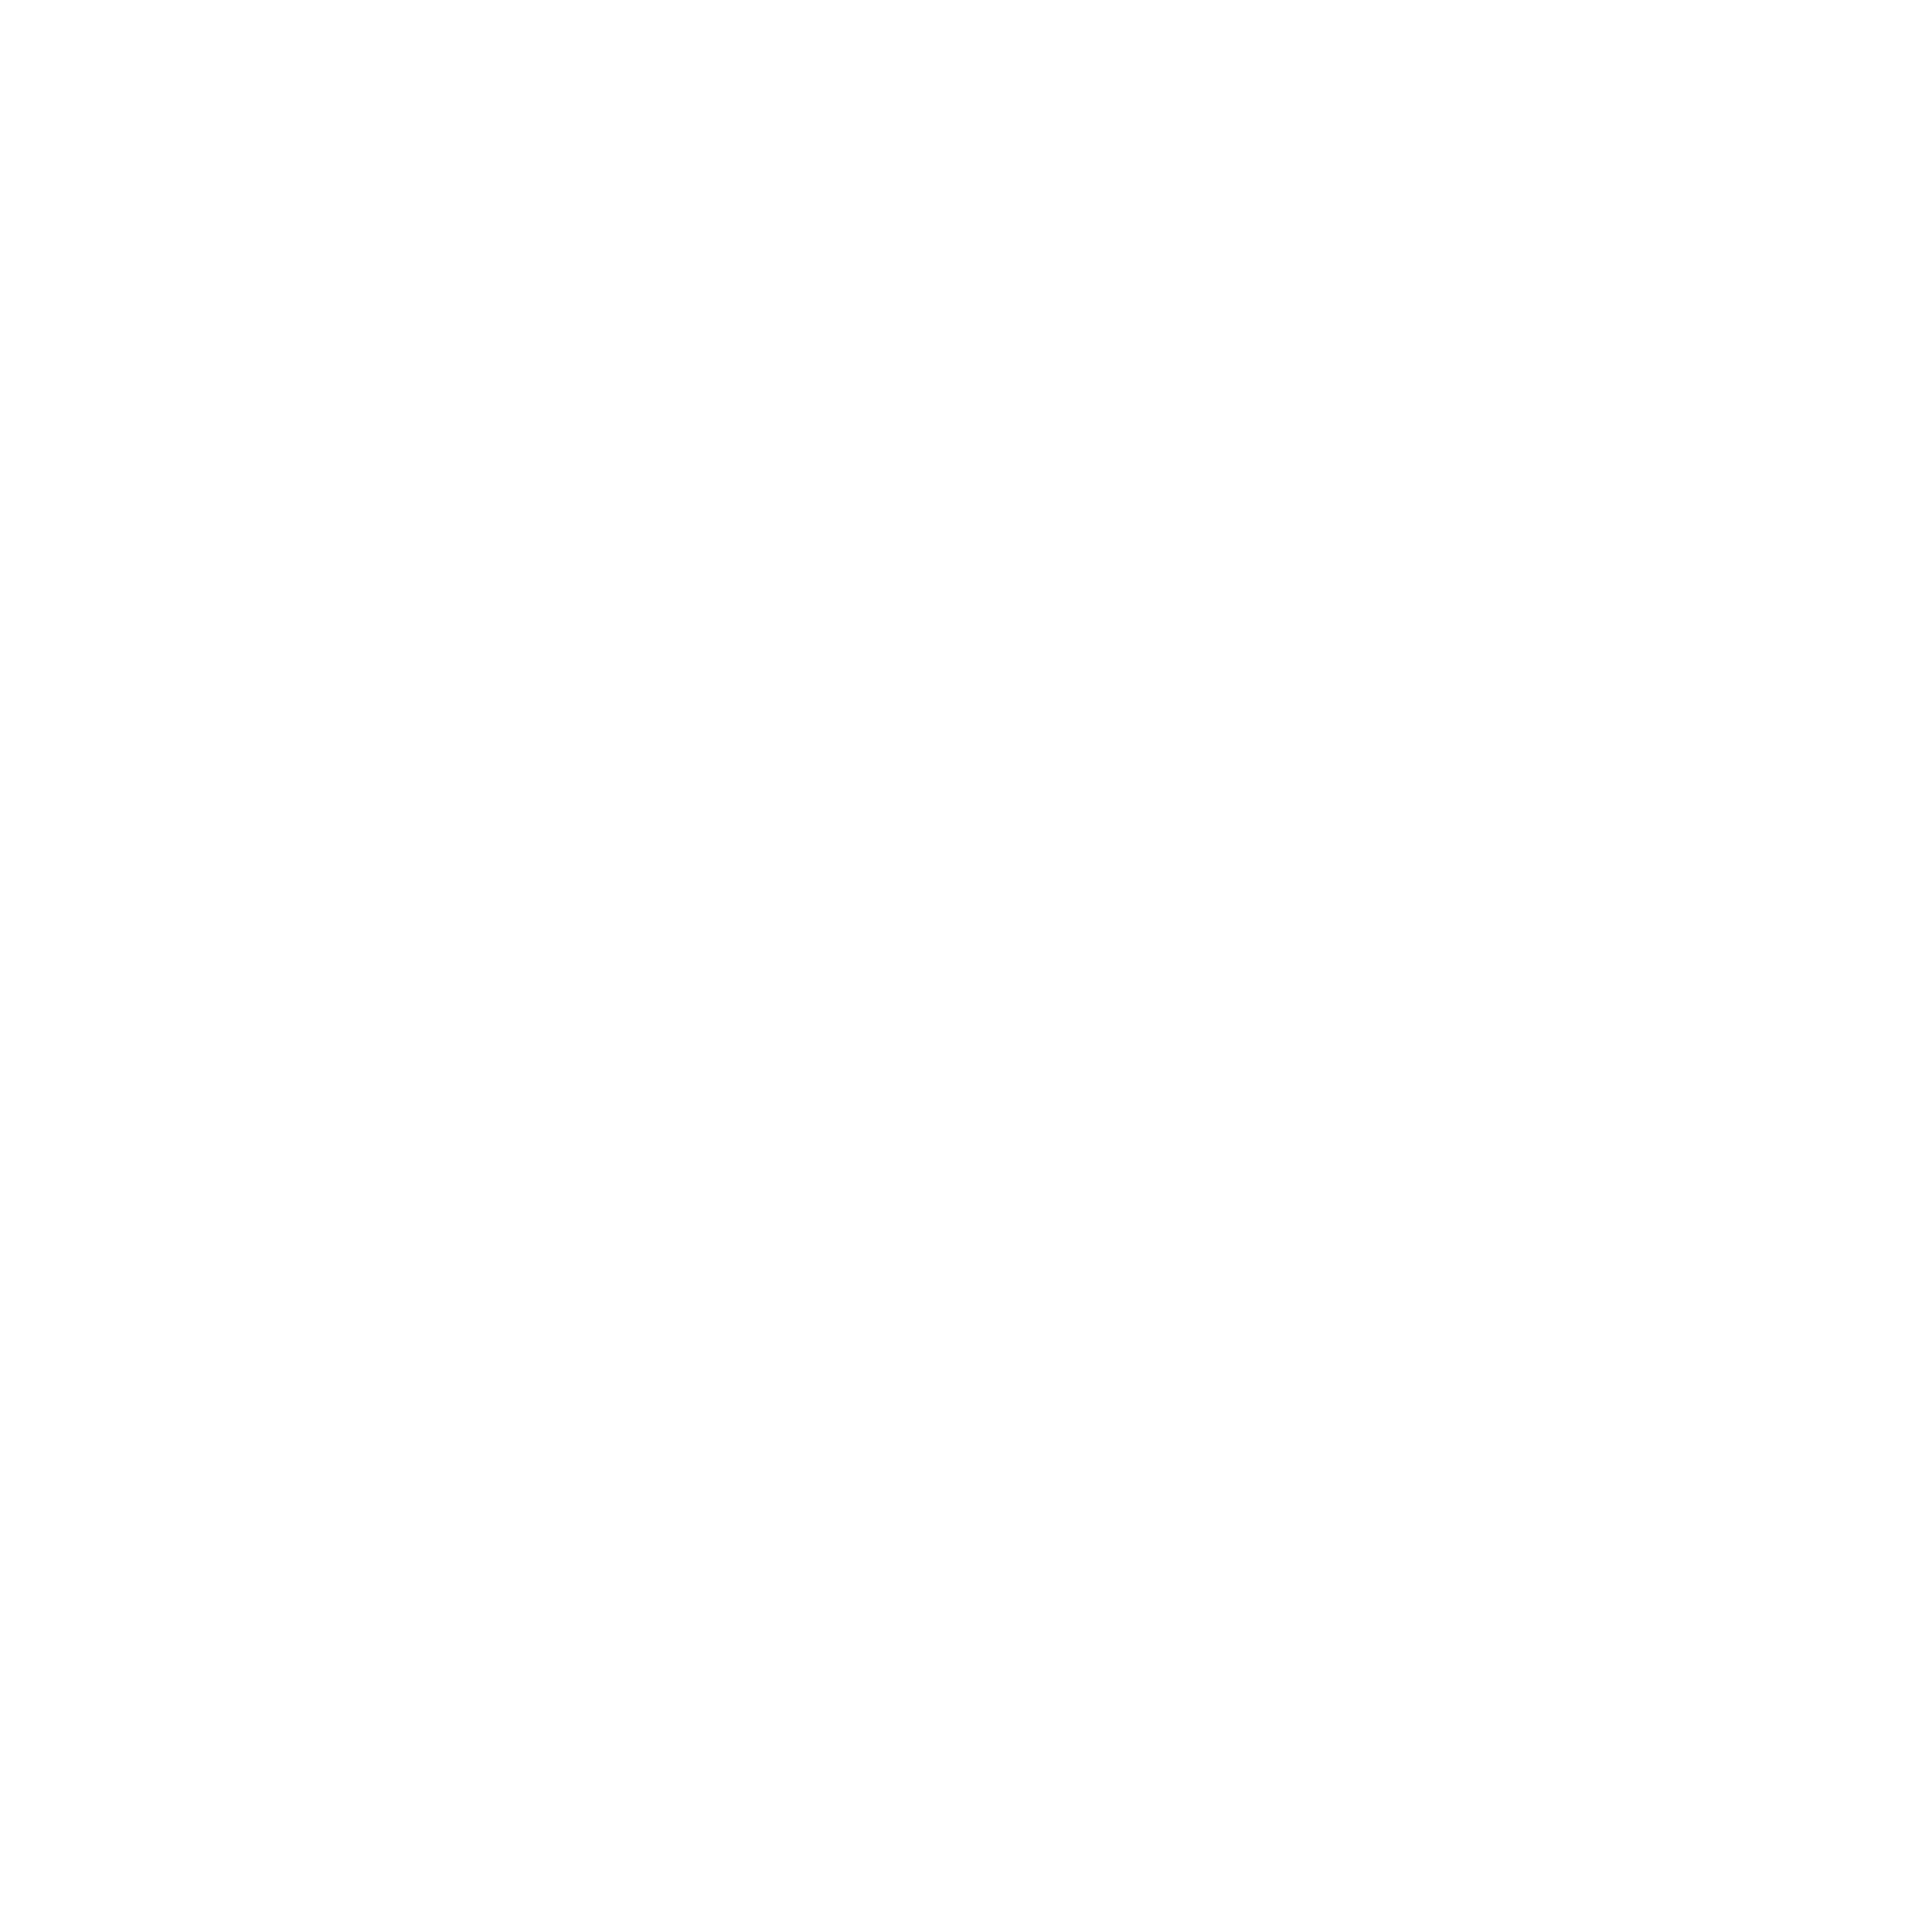 Tennant Company: Succesverhaal